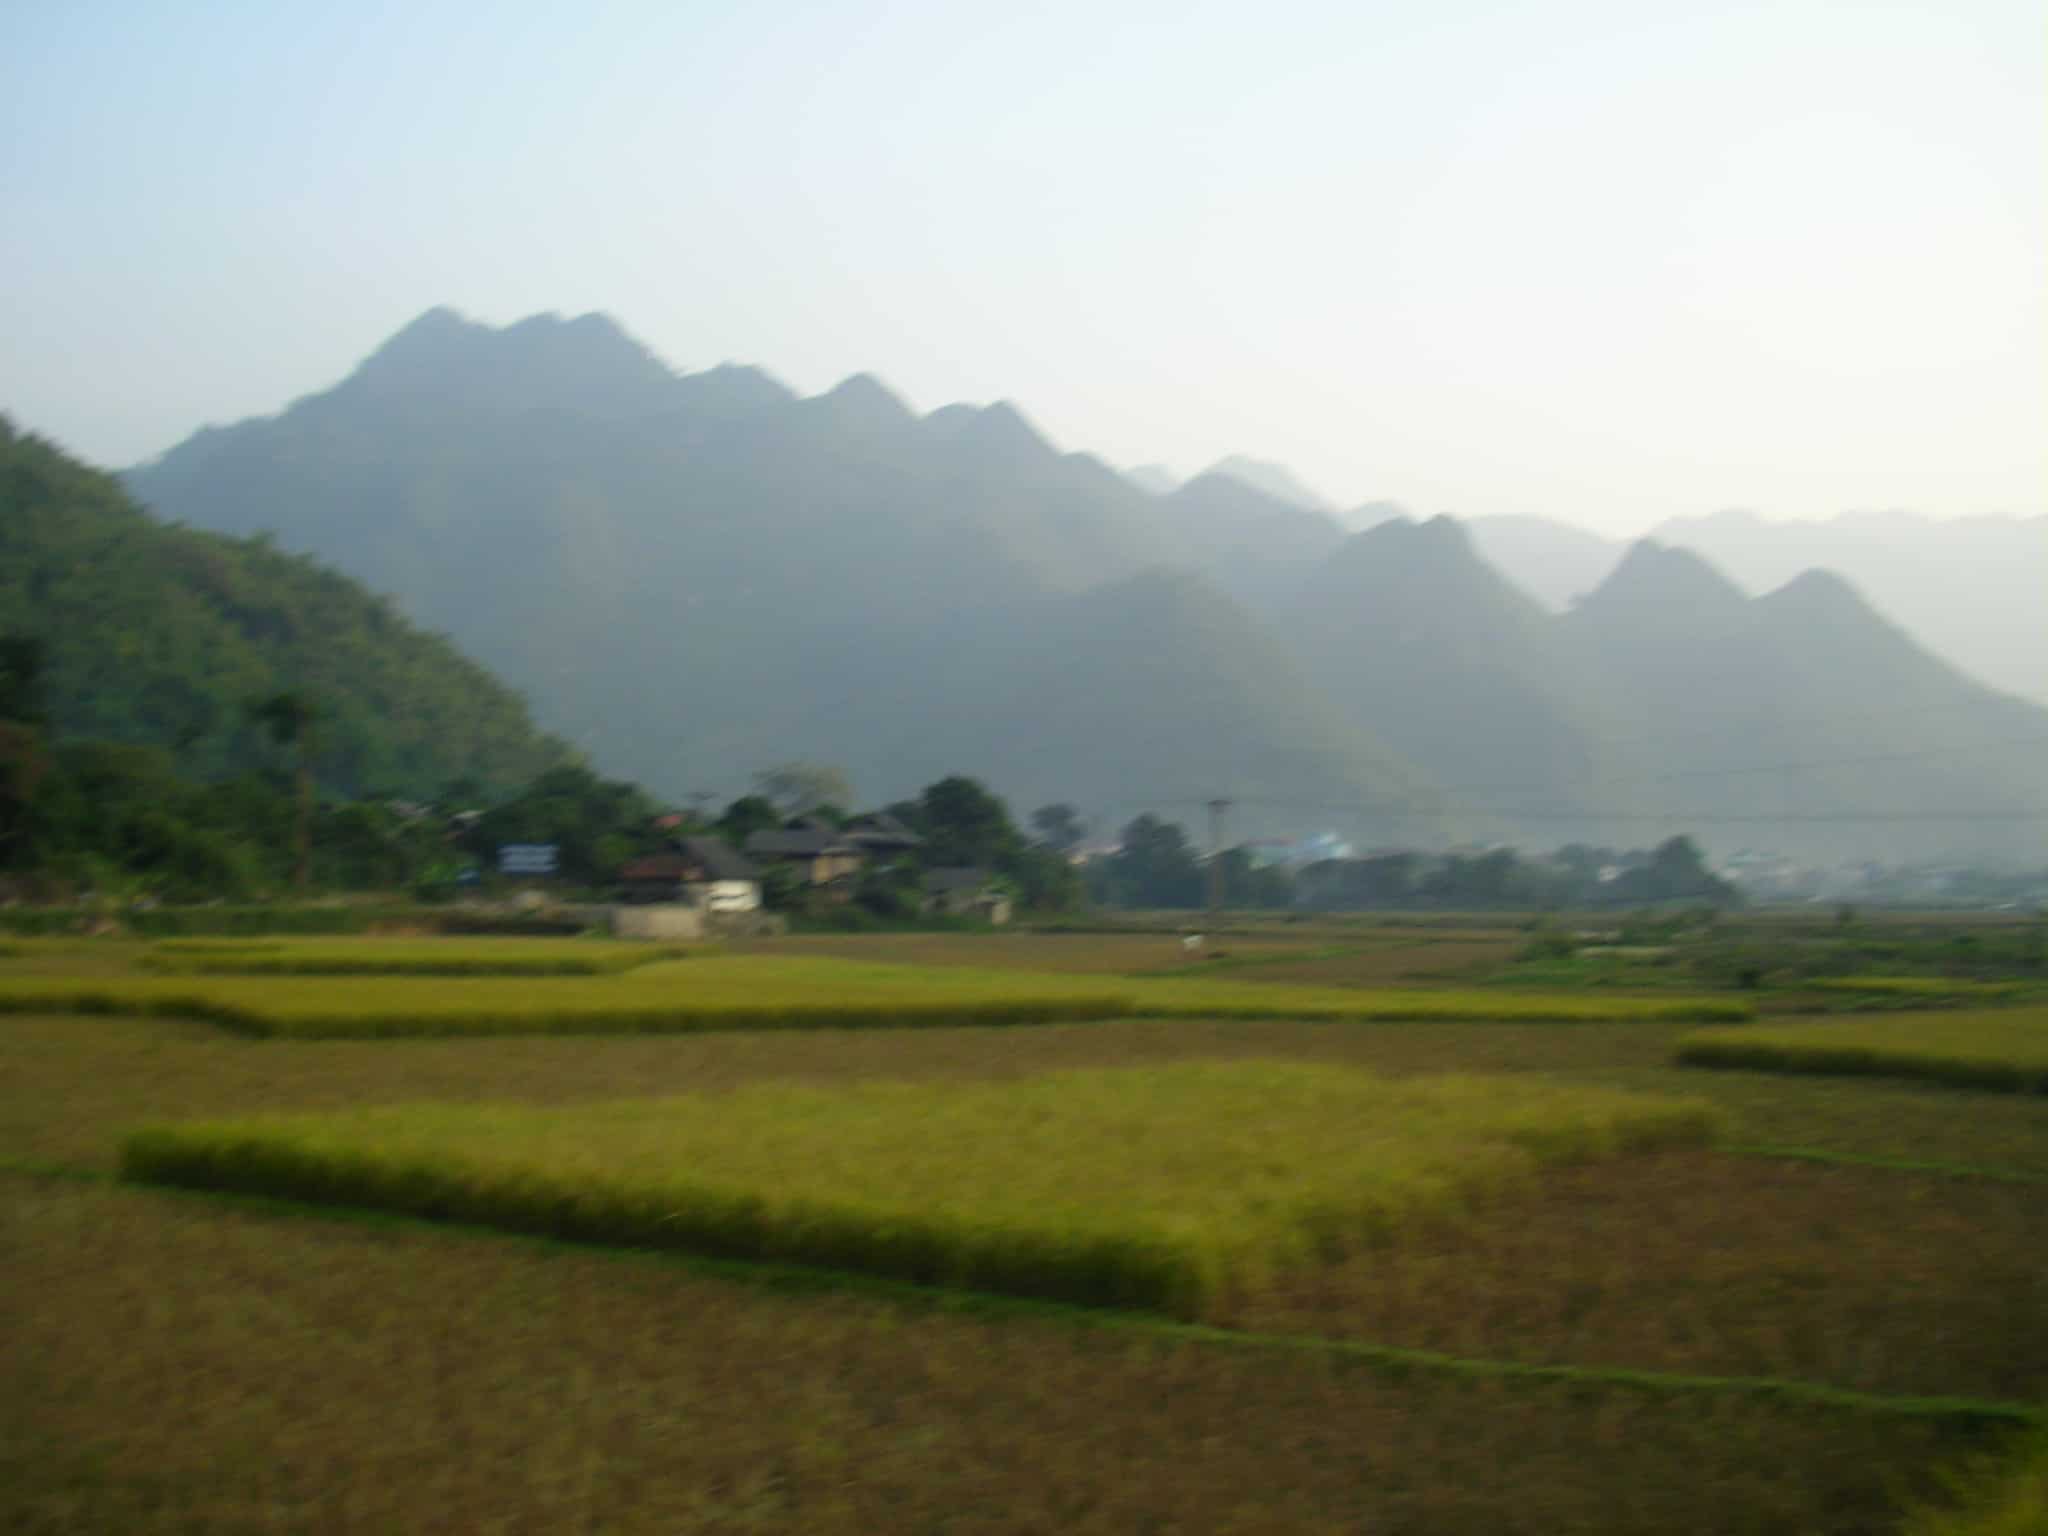 Northwest Vietnam, offbeat Vietnam, rice paddy vietnam, Ben Lac village, Off the beaten track, Vietnam travel blog, Mai Chau, small towns near Hanoi